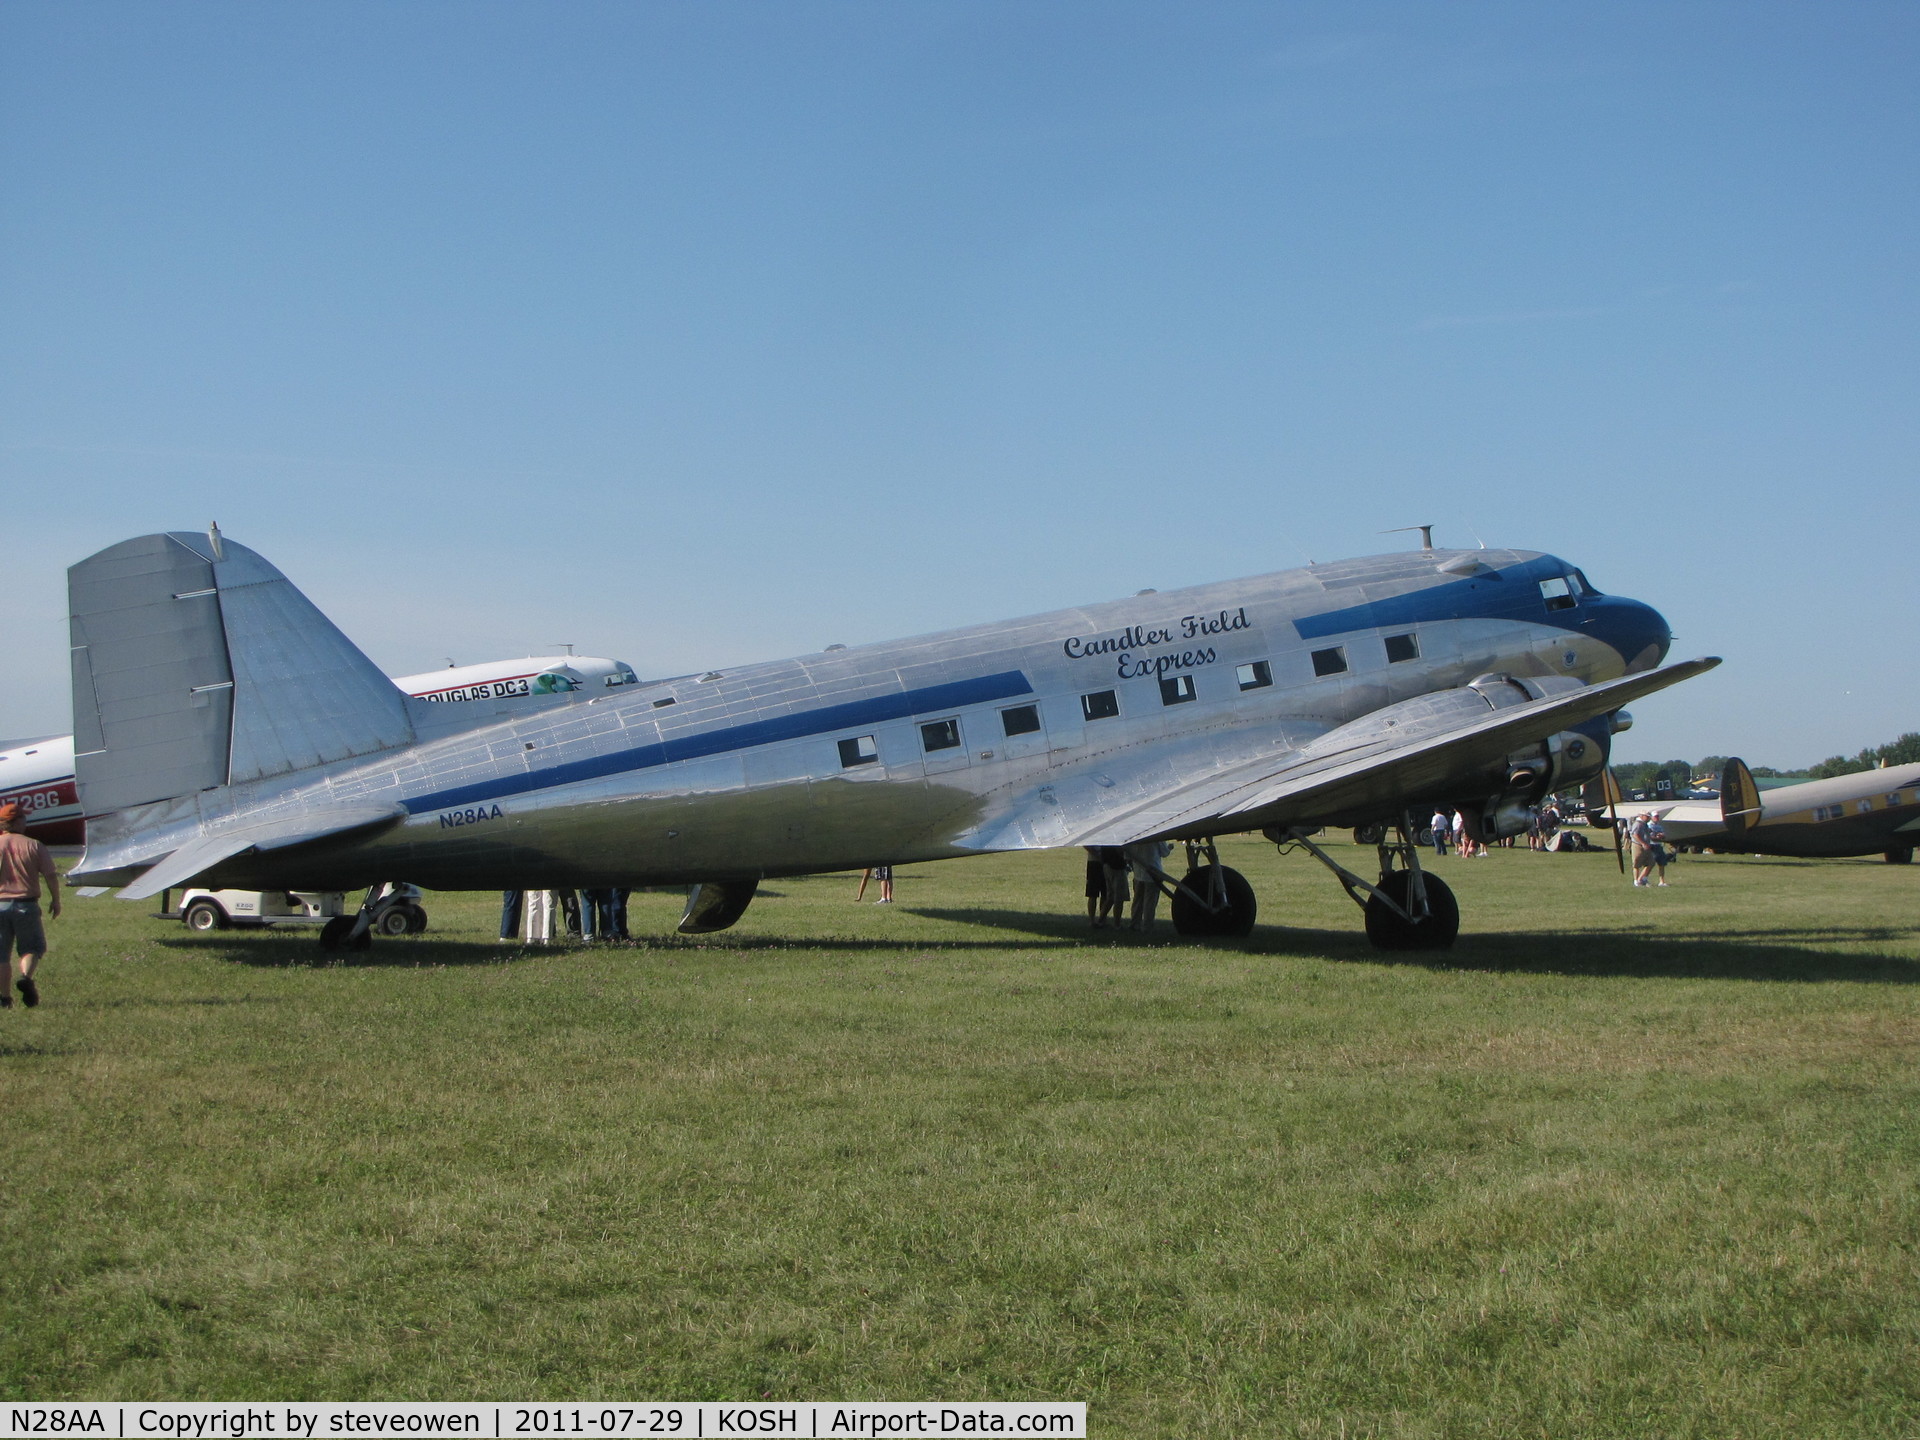 N28AA, 1940 Douglas DC-3A C/N 2239, polished and shinning in the Oshkosh sun